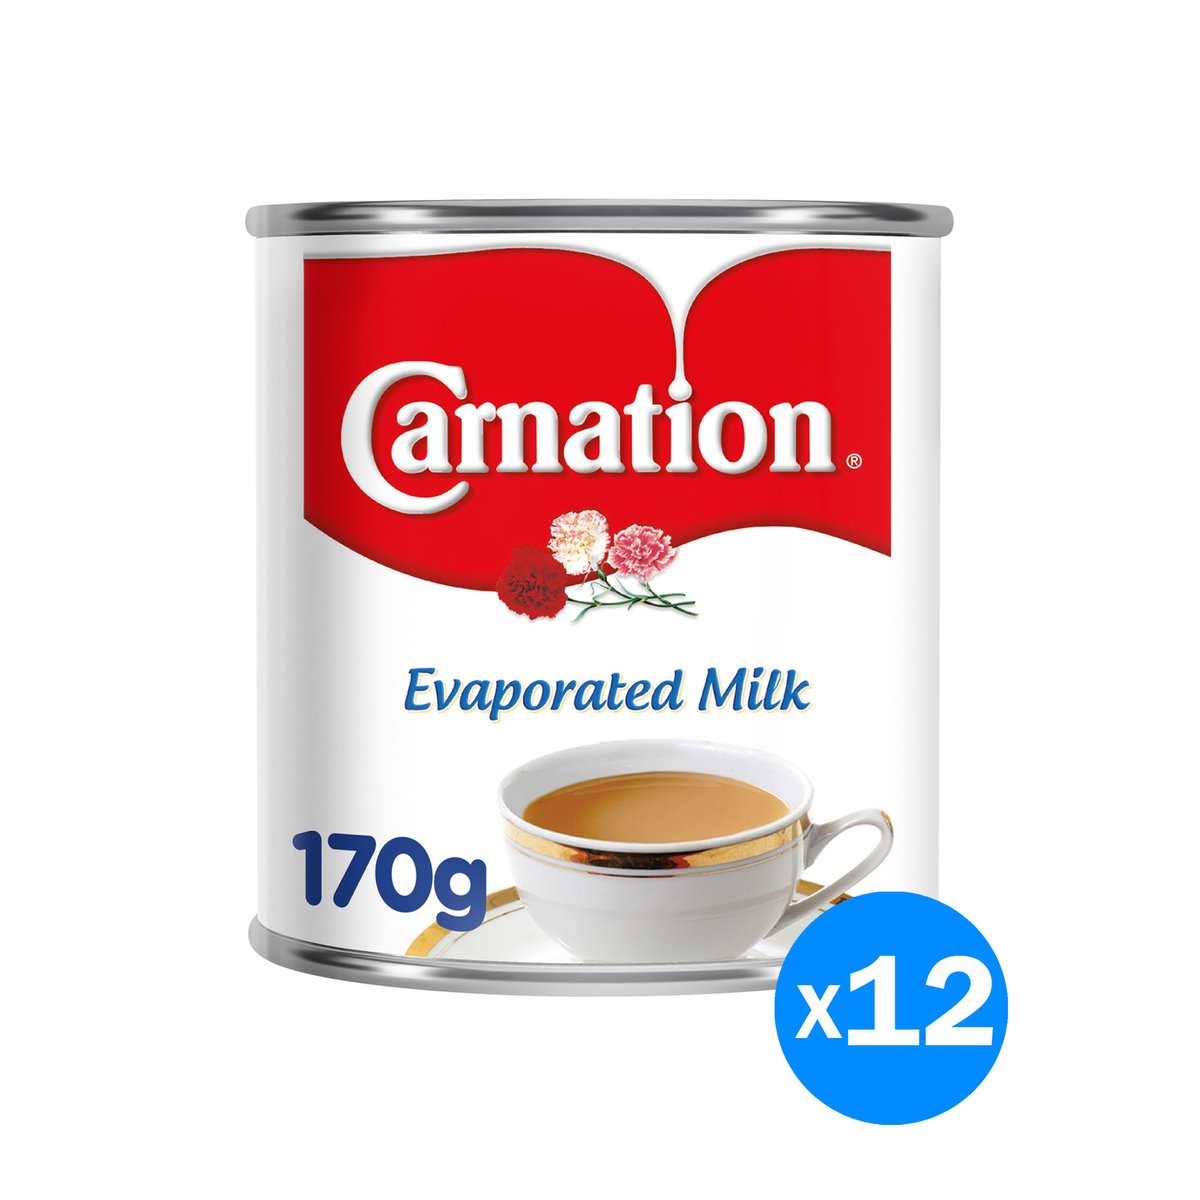 Carnation Evaporated Milk 12 x 170g